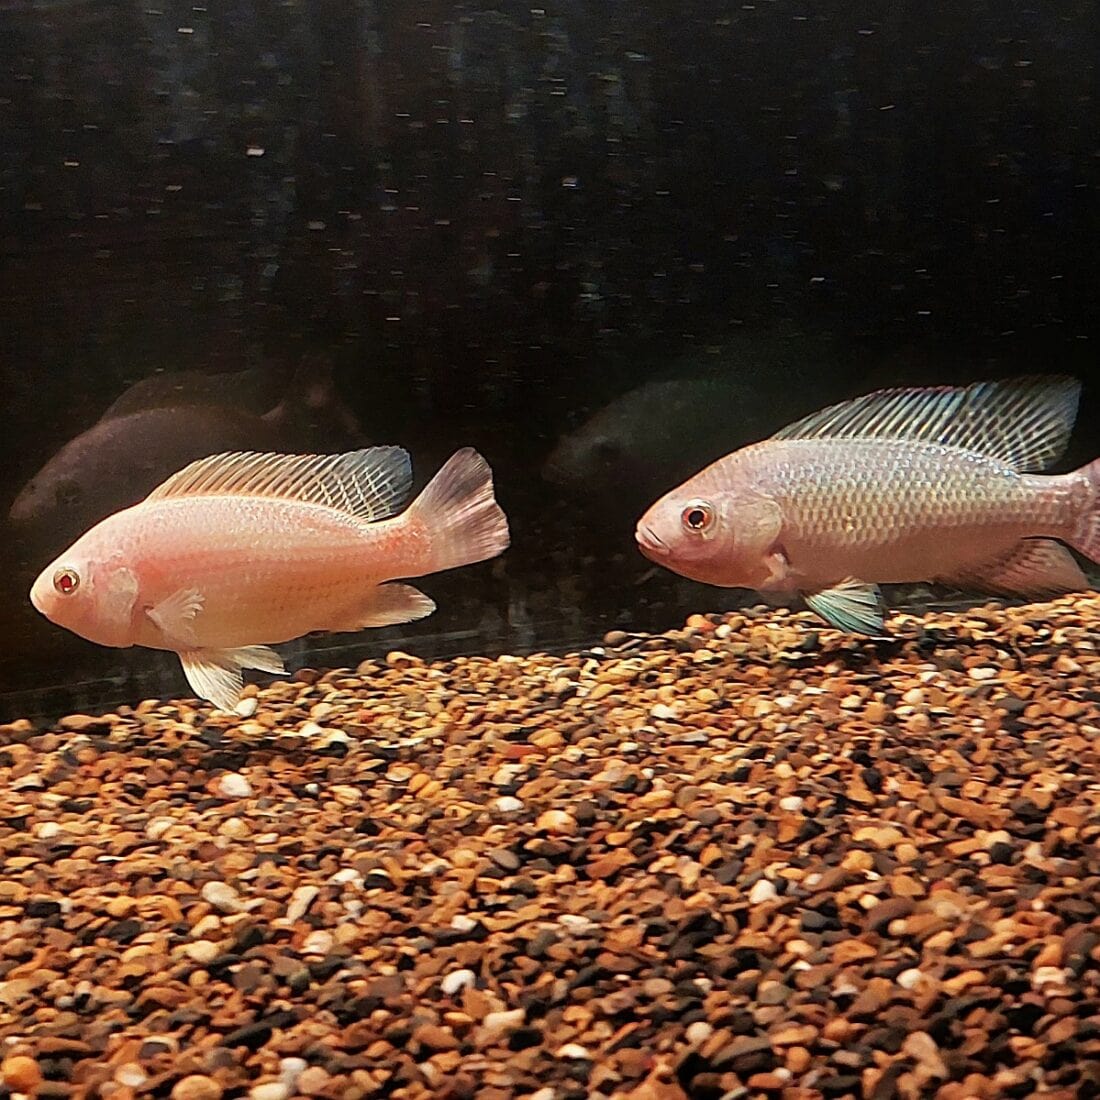 A pink, genetically-edited fish and a gray wildfish. Photo by Jakob Biran